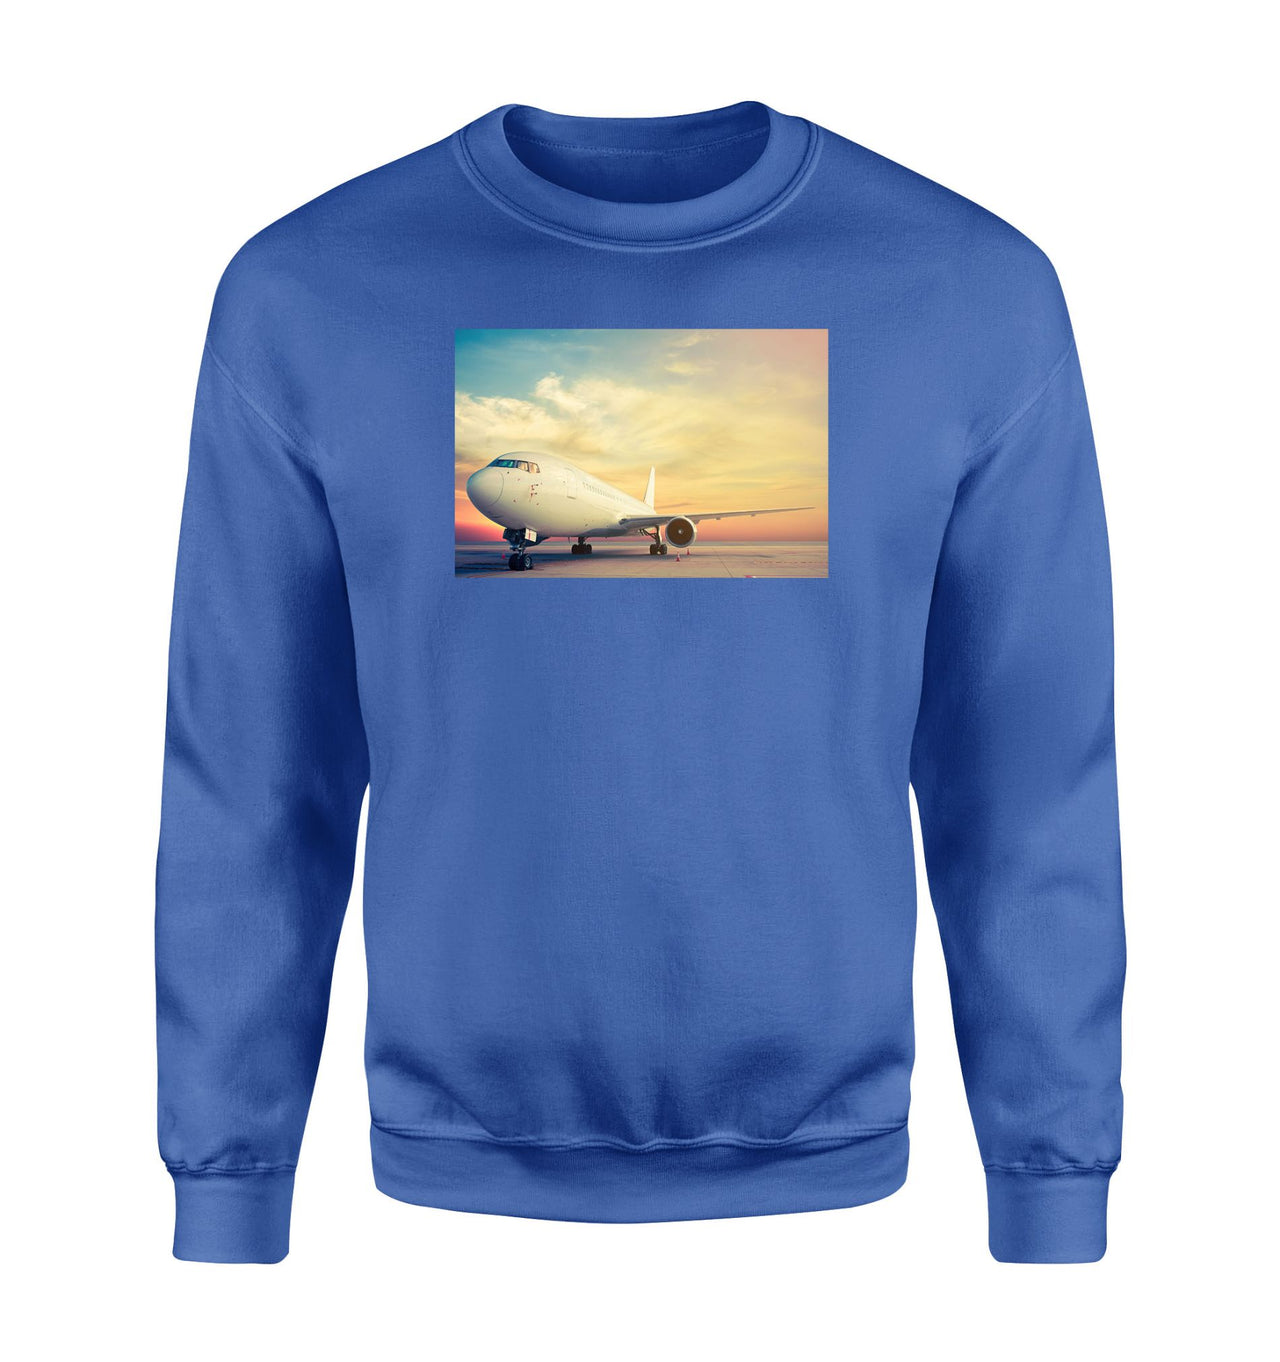 Parked Aircraft During Sunset Designed Sweatshirts